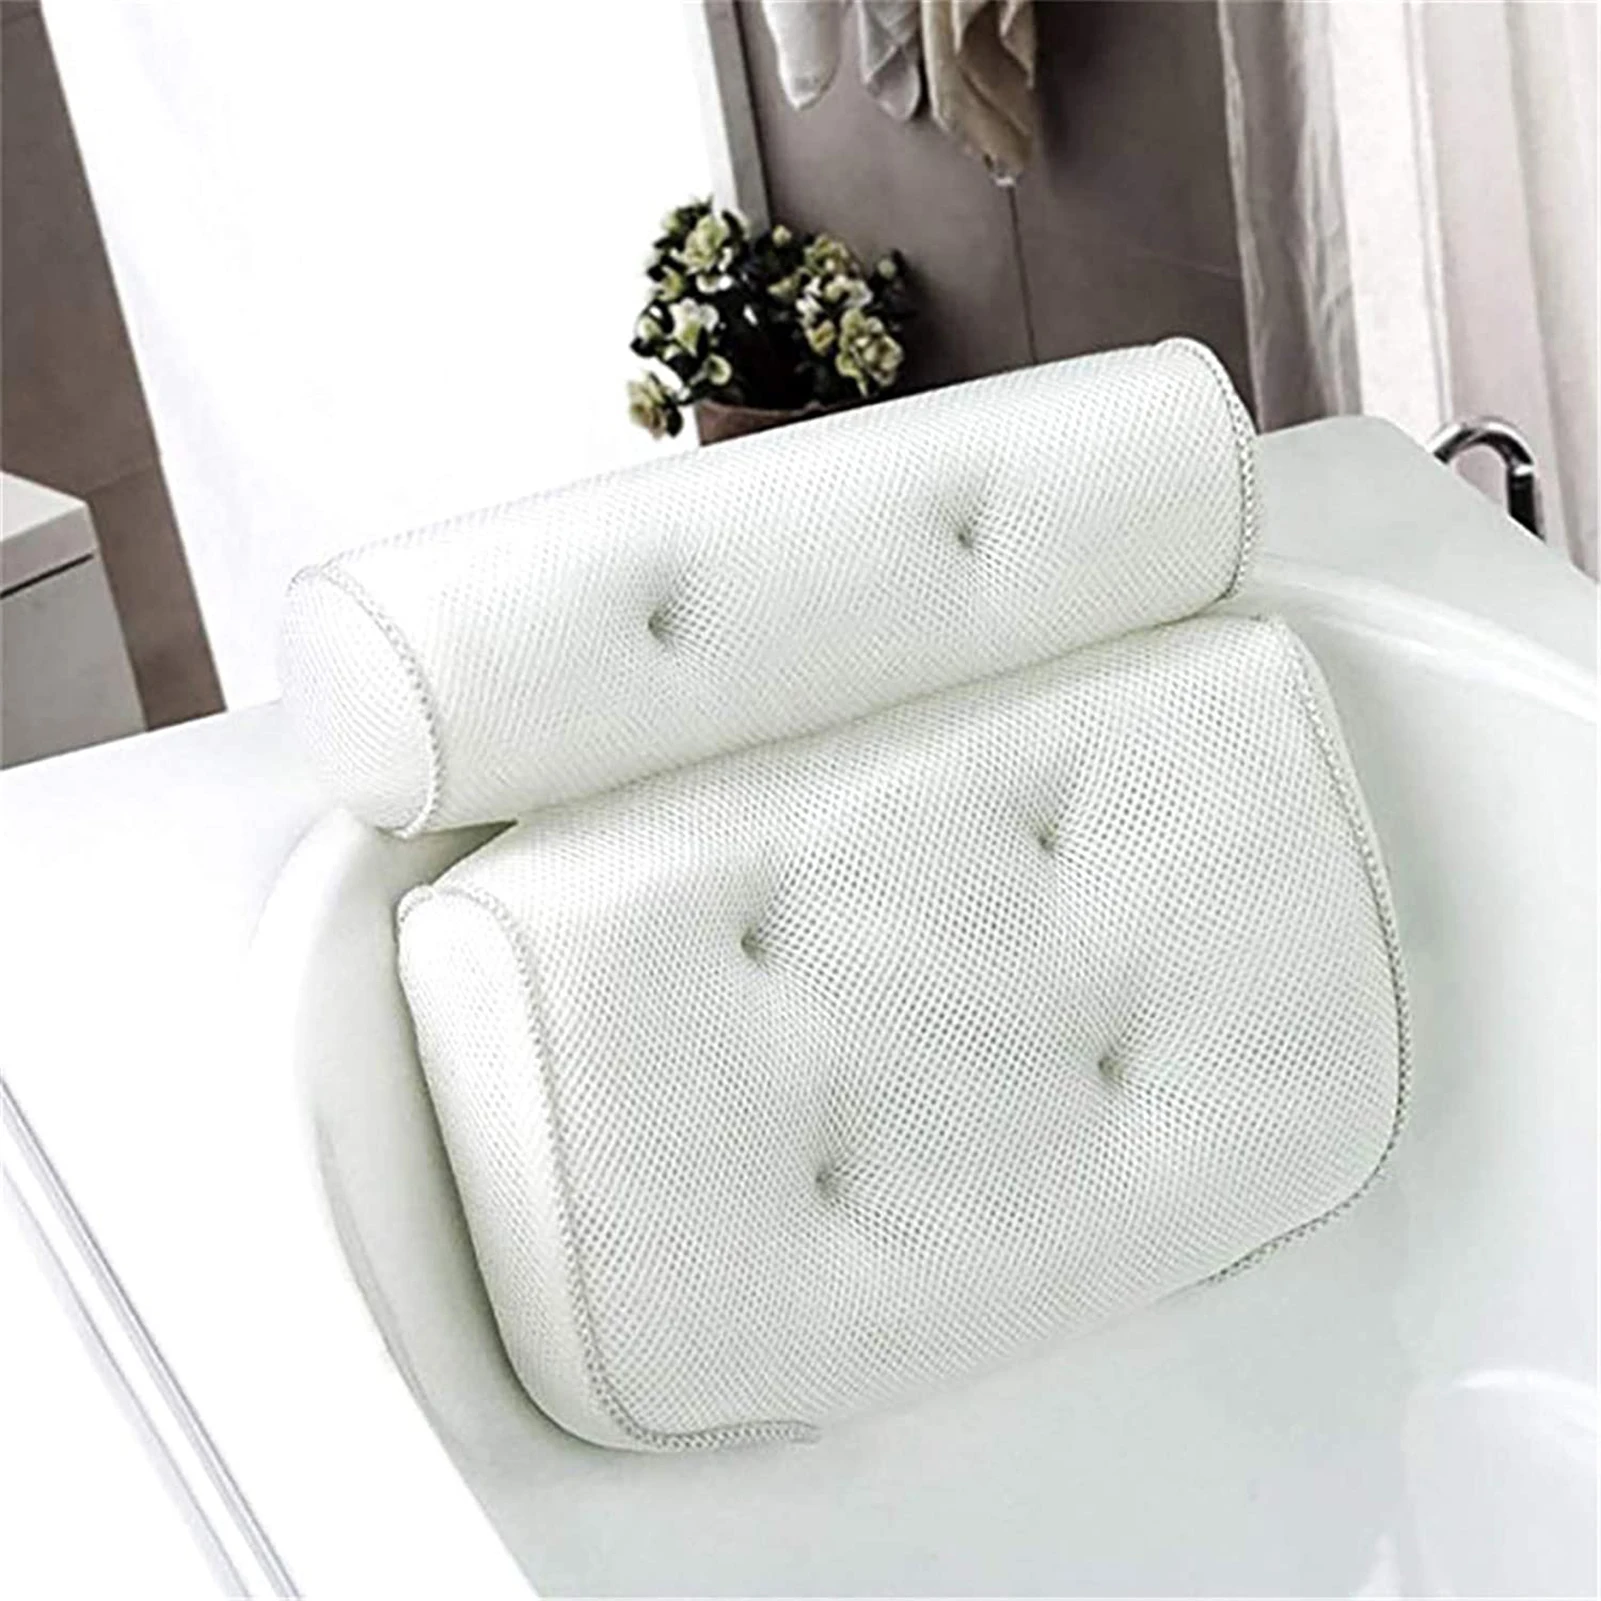 

Luxury Bath Pillow Ergonomic Bathtub Spa Pillow with 3D Air Mesh Technology and 6 Suction Cups for Bathtub Hot Tub CLH@8